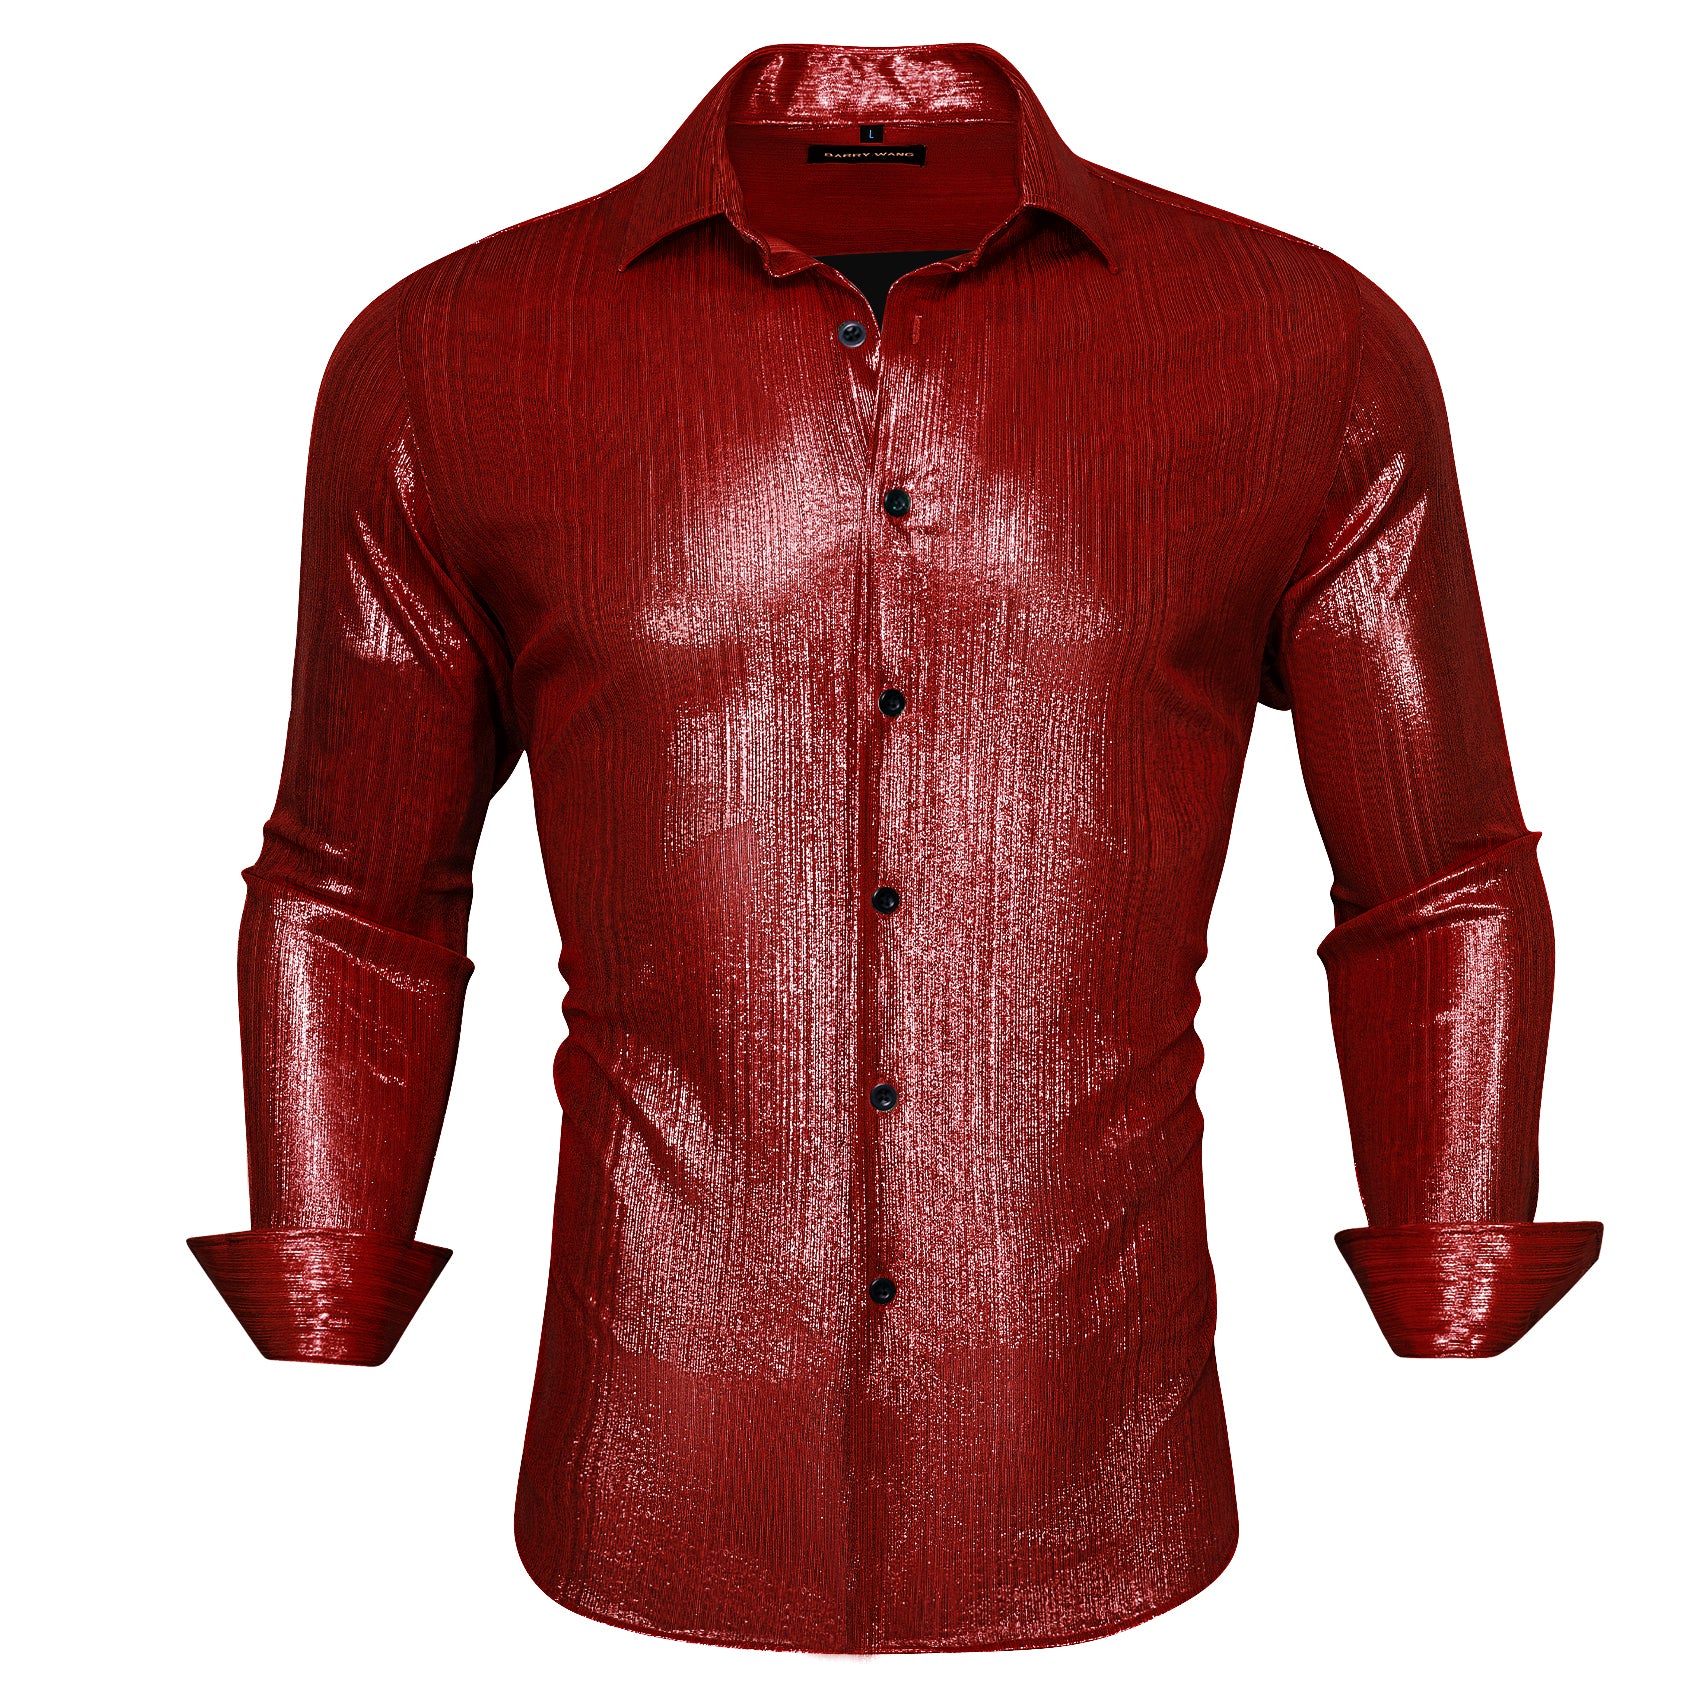 Barry.wang Brick Red Solid Silk Shirt